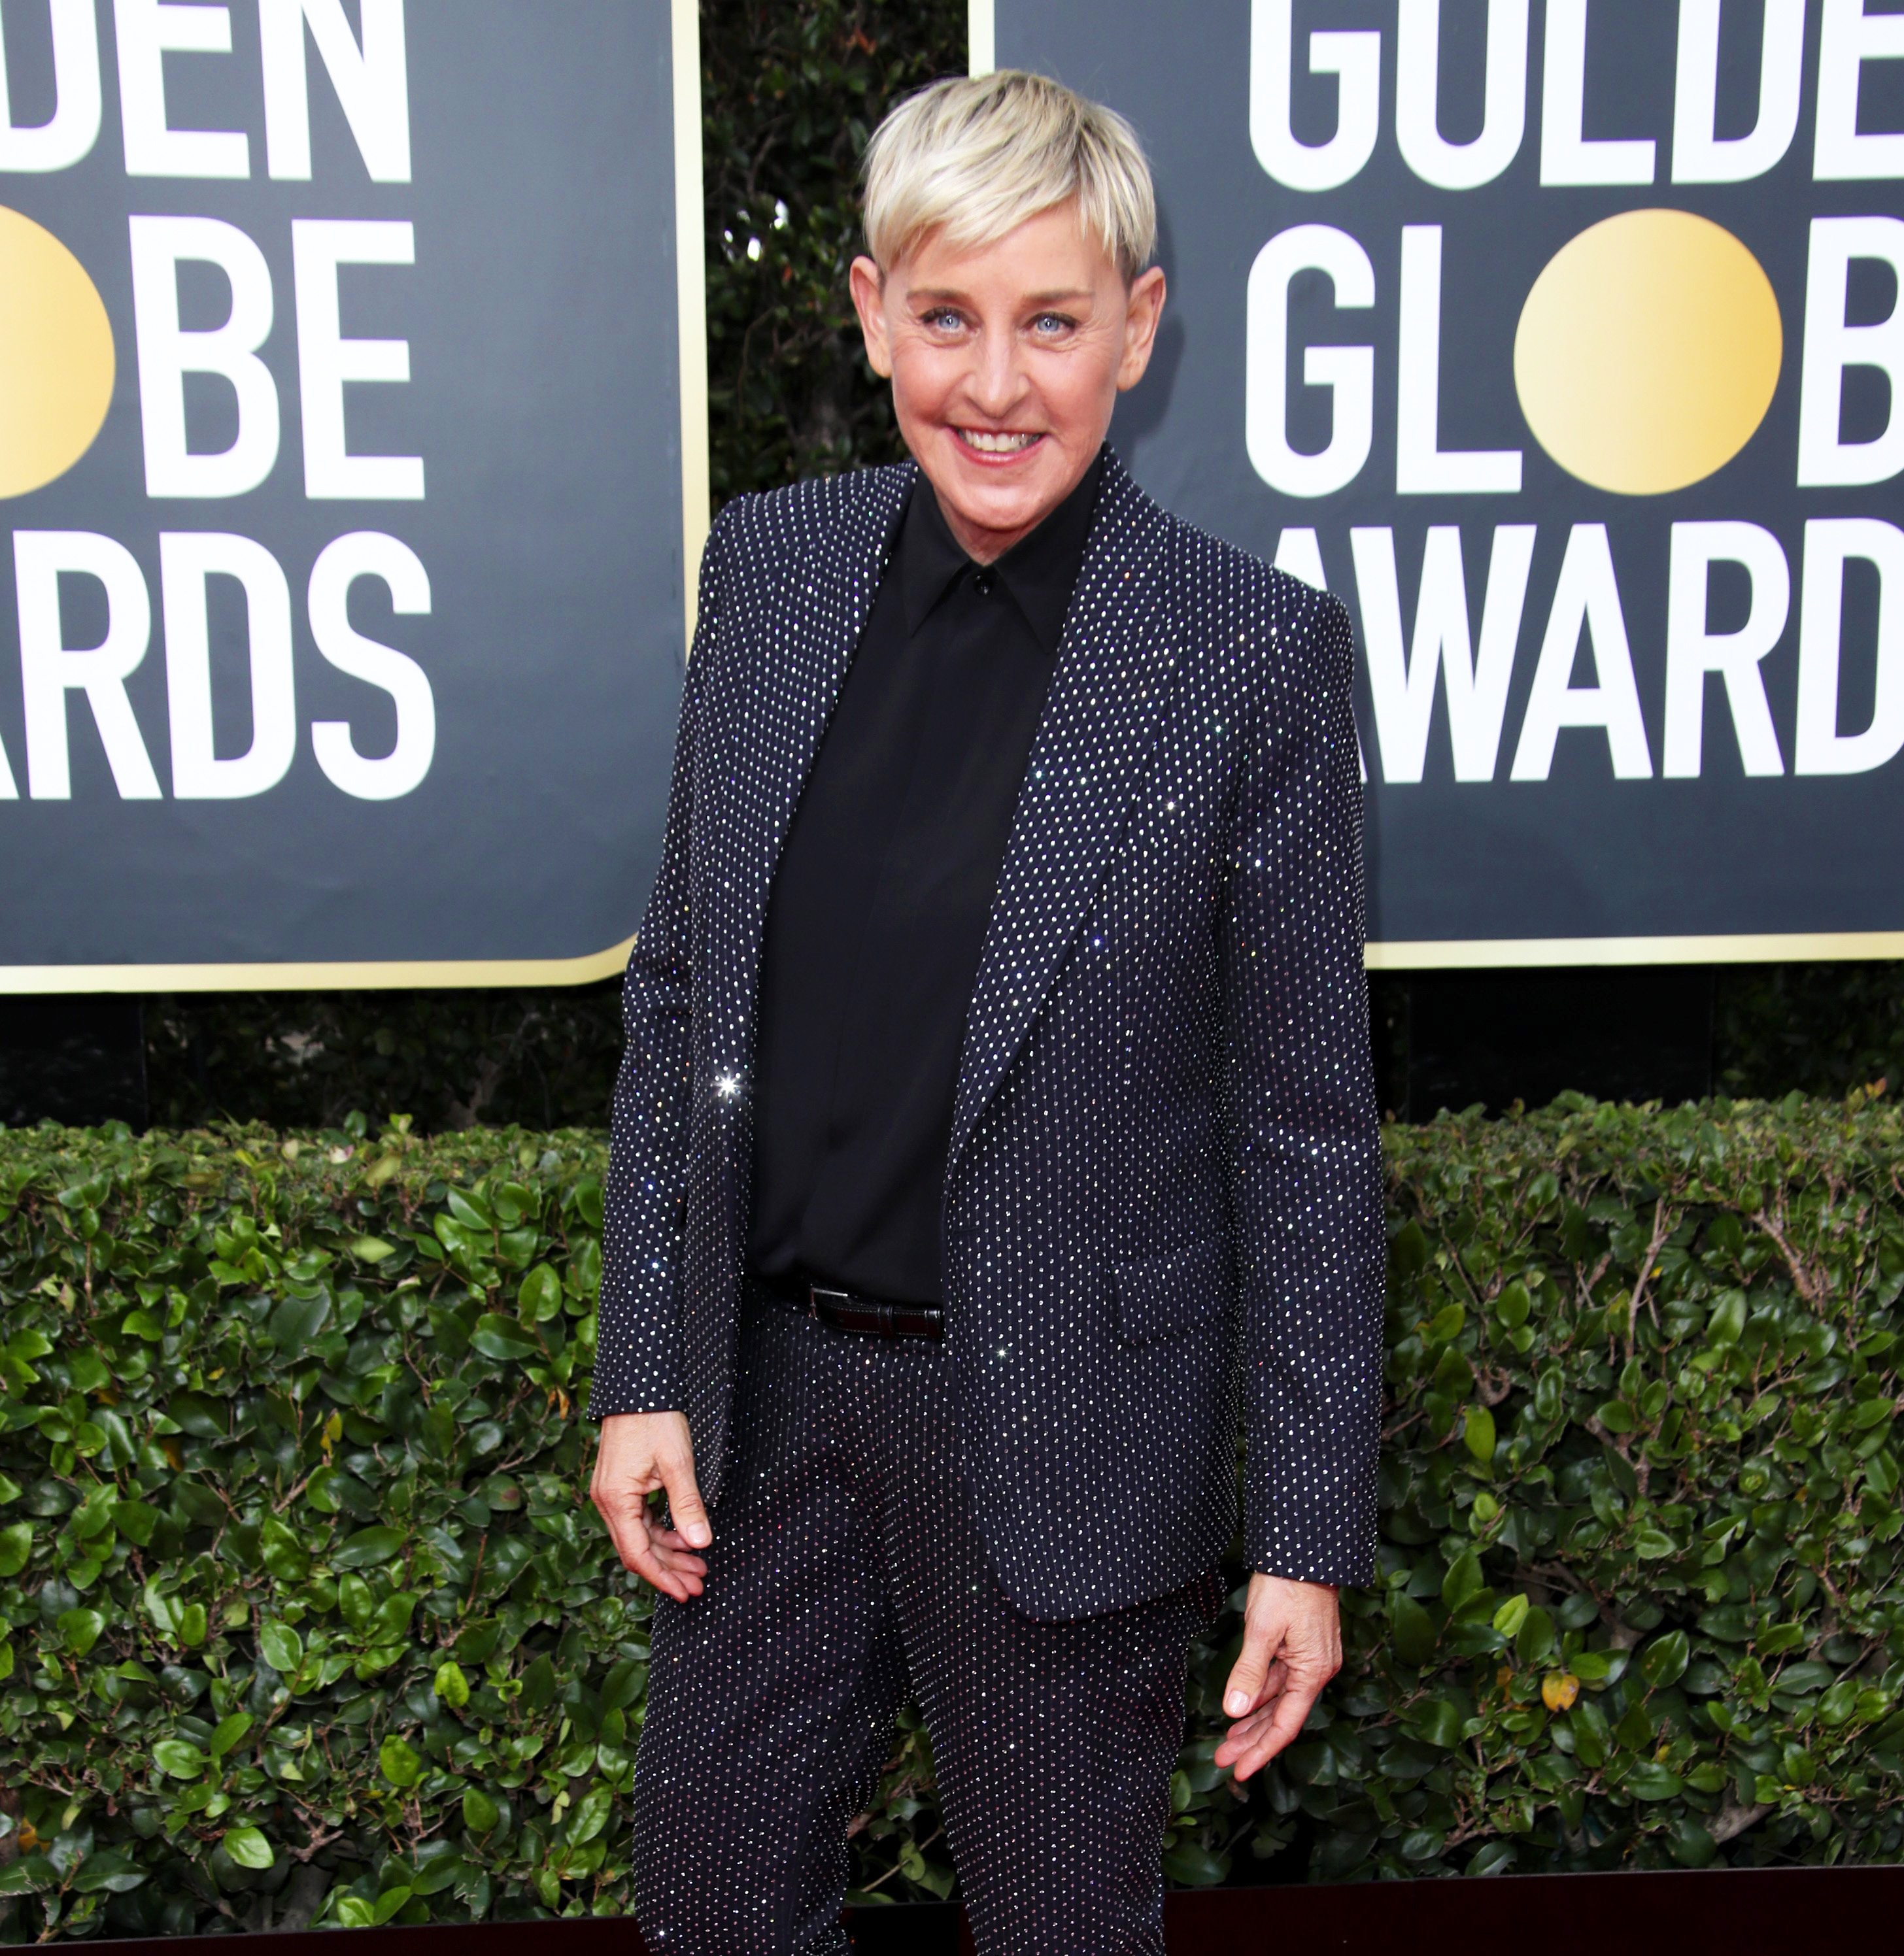 https://www.usmagazine.com/wp-content/uploads/2020/08/Ellen-DeGeneres-And-More-Celebrities-React-To-Ellen-DeGeneres-Allegations-.jpg?quality=86&strip=all